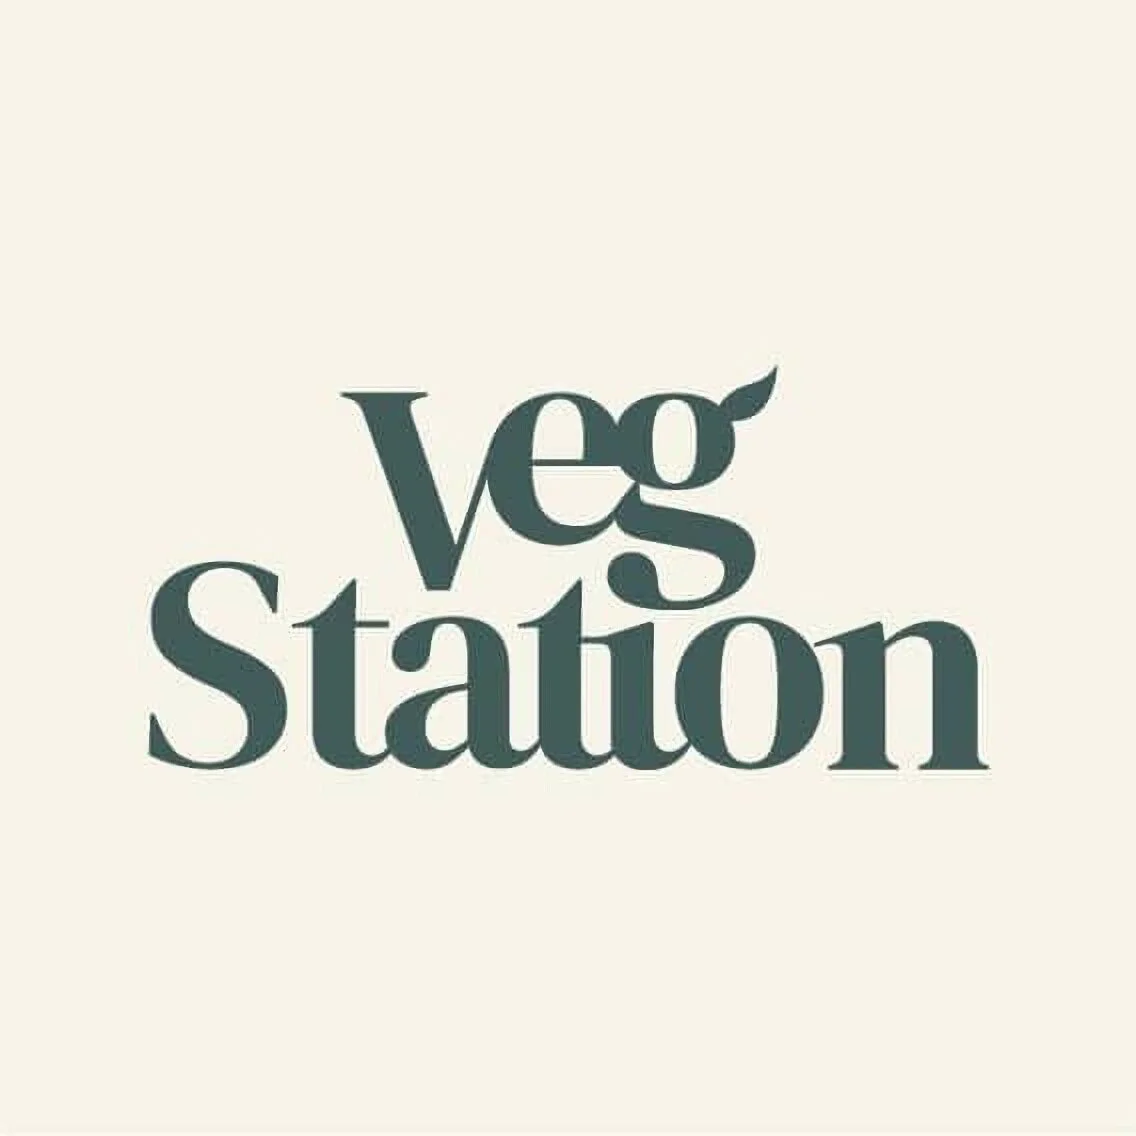 Veg Station-7279